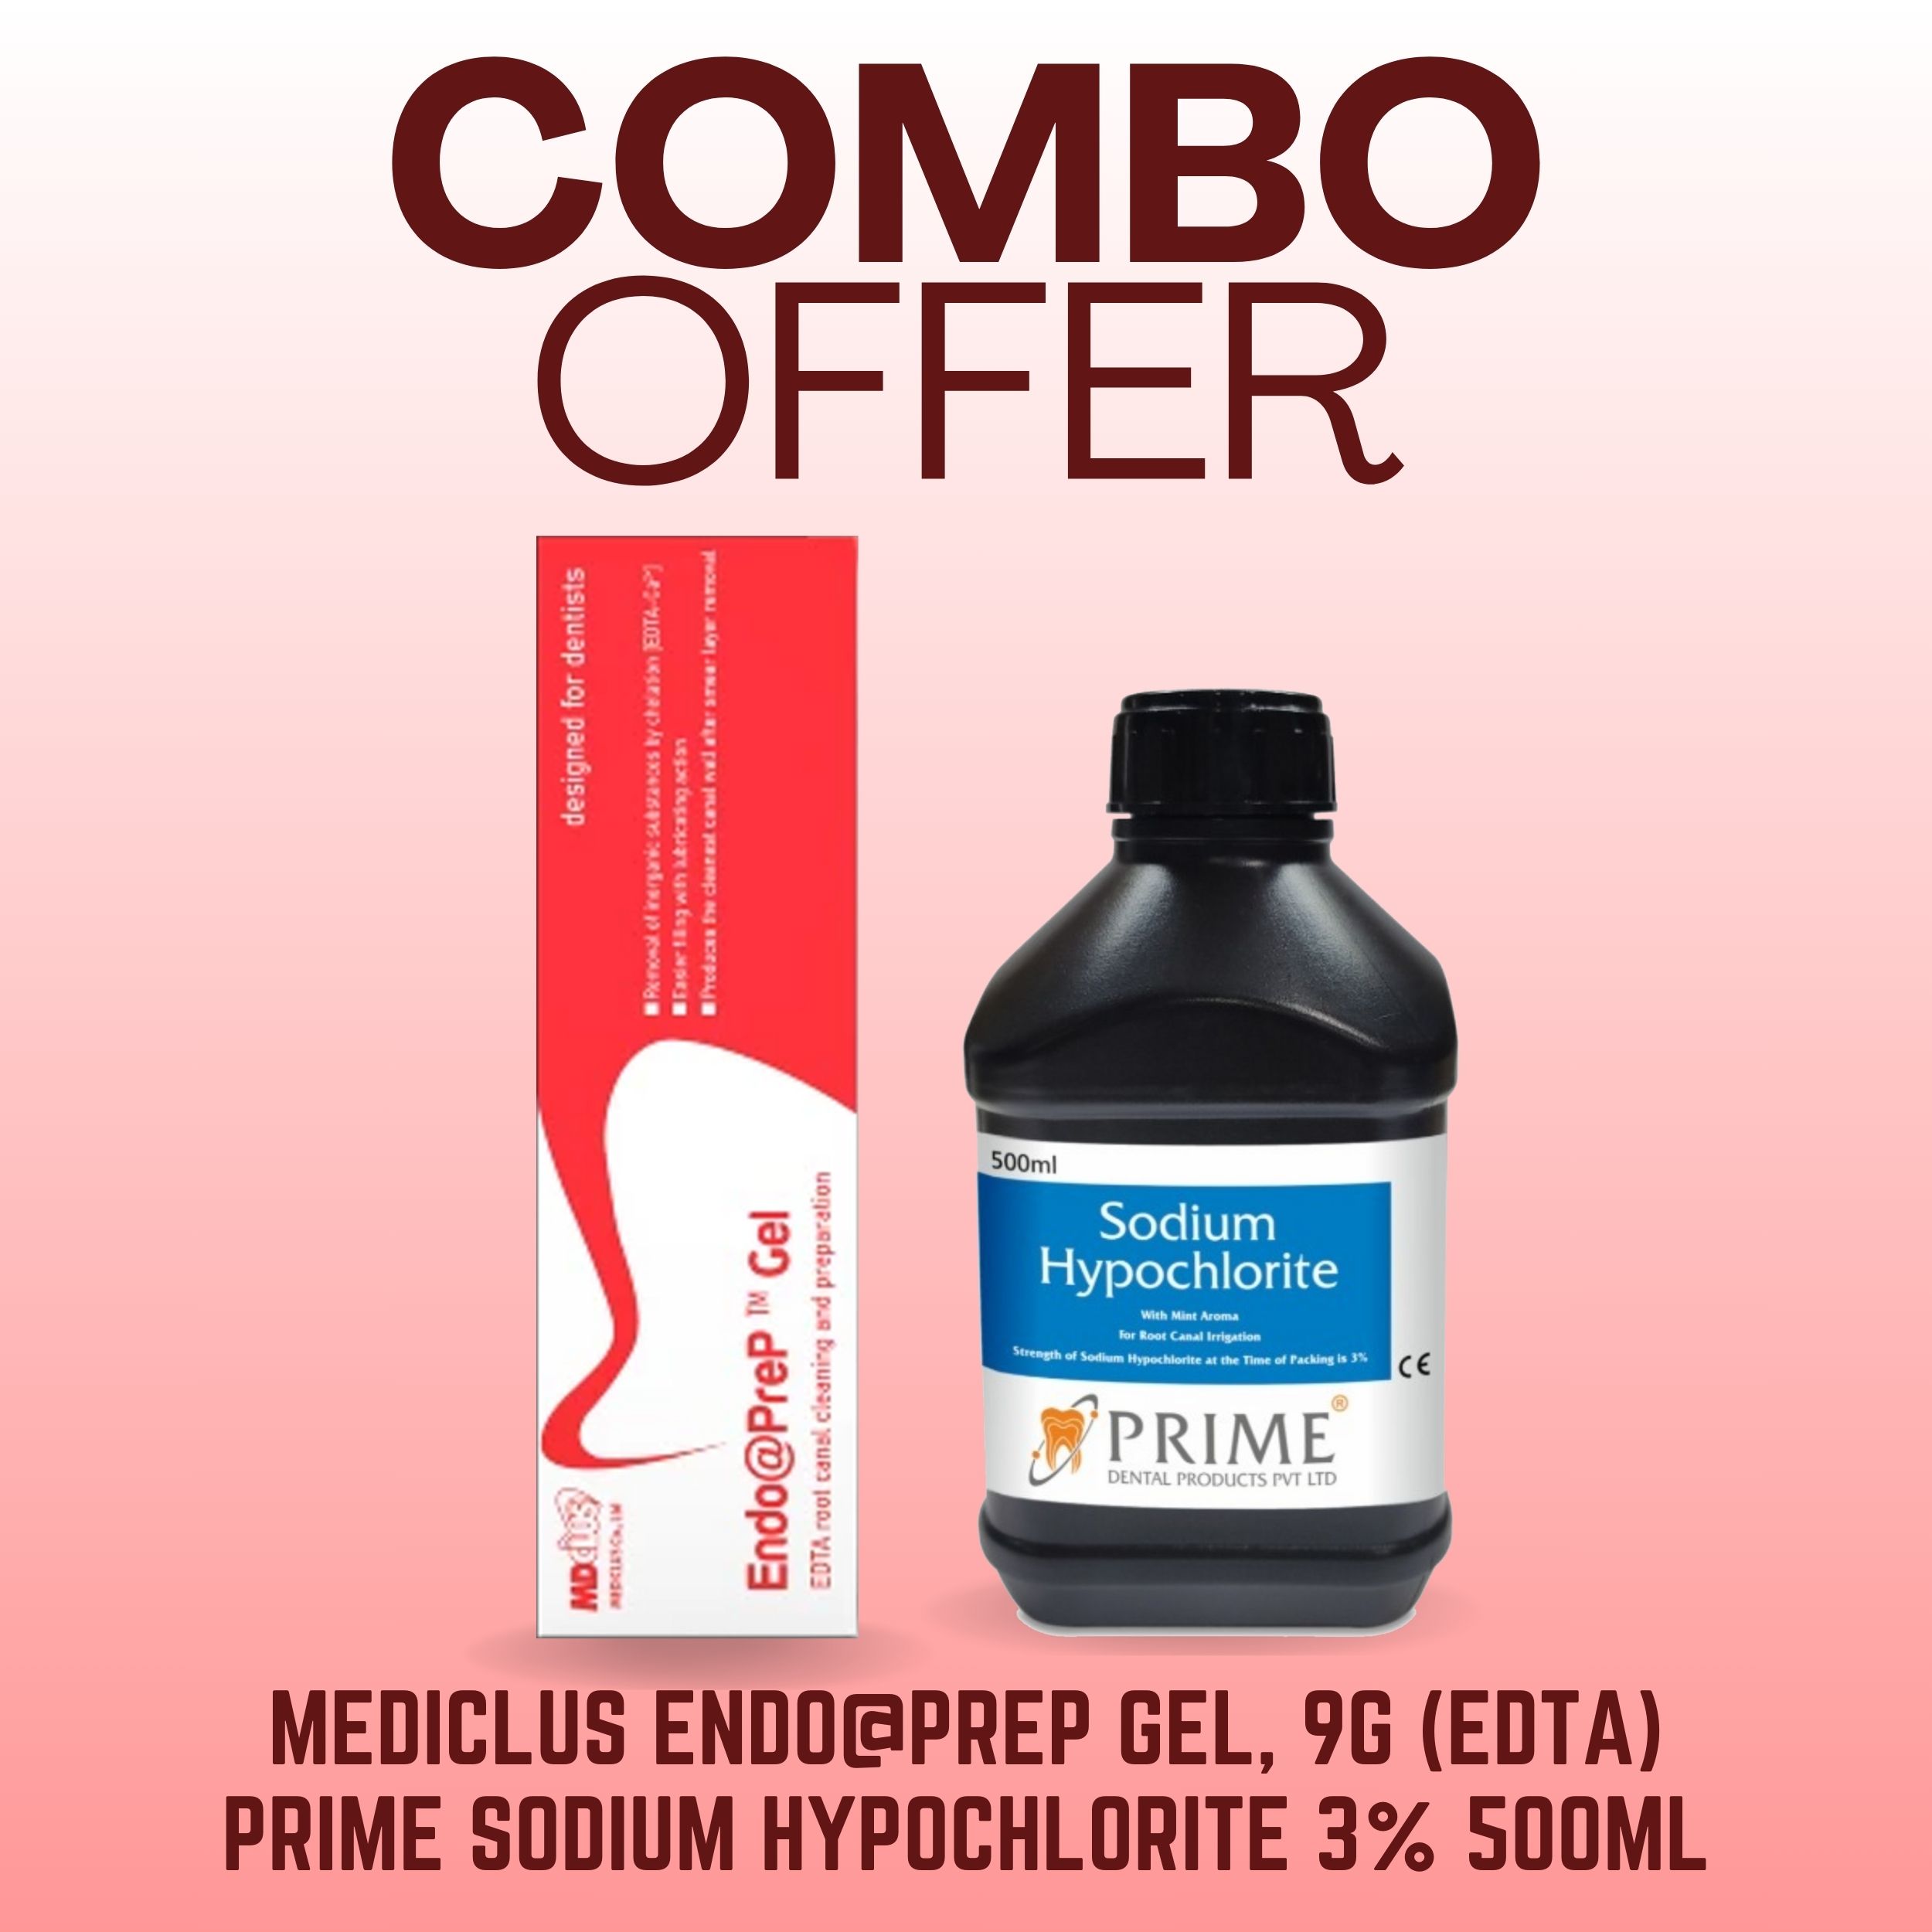 Mediclus Endo@PreP Gel, 9g (EDTA) (Expiry 25-Sep-24) + Prime Sodium Hypochlorite 3% 500ml